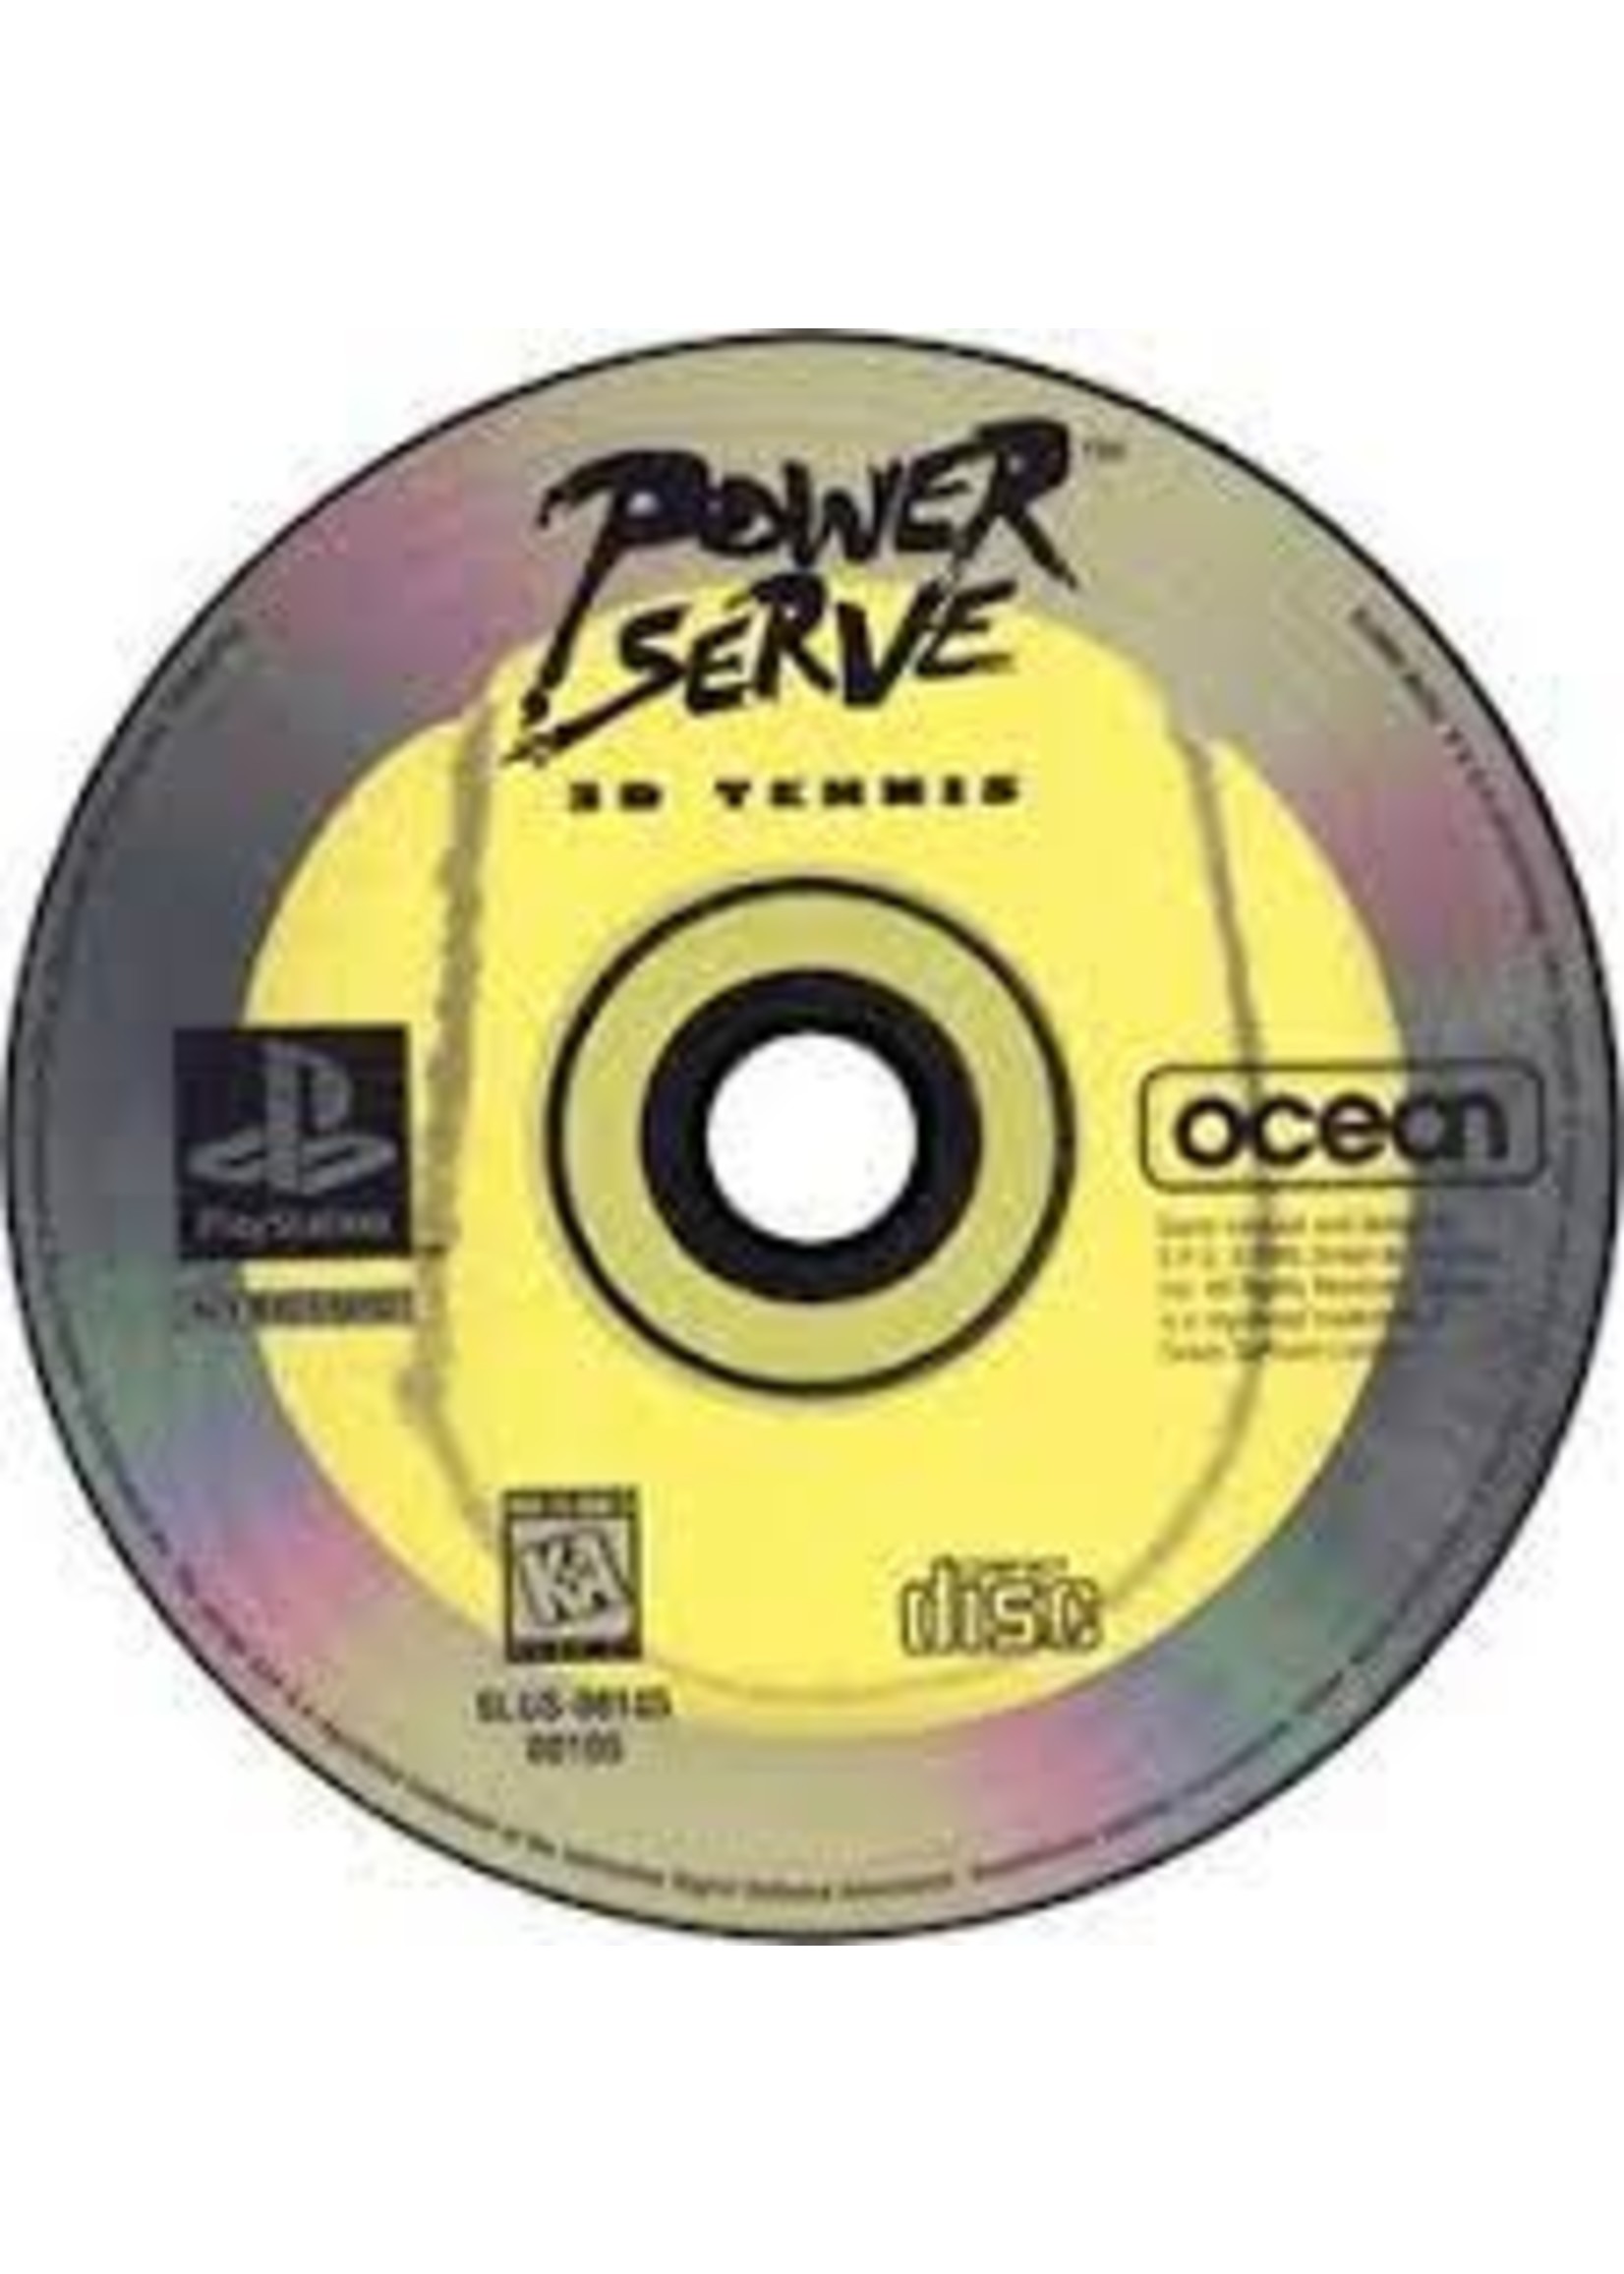 Sony Playstation 1 (PS1) Power Serve Tennis - Print